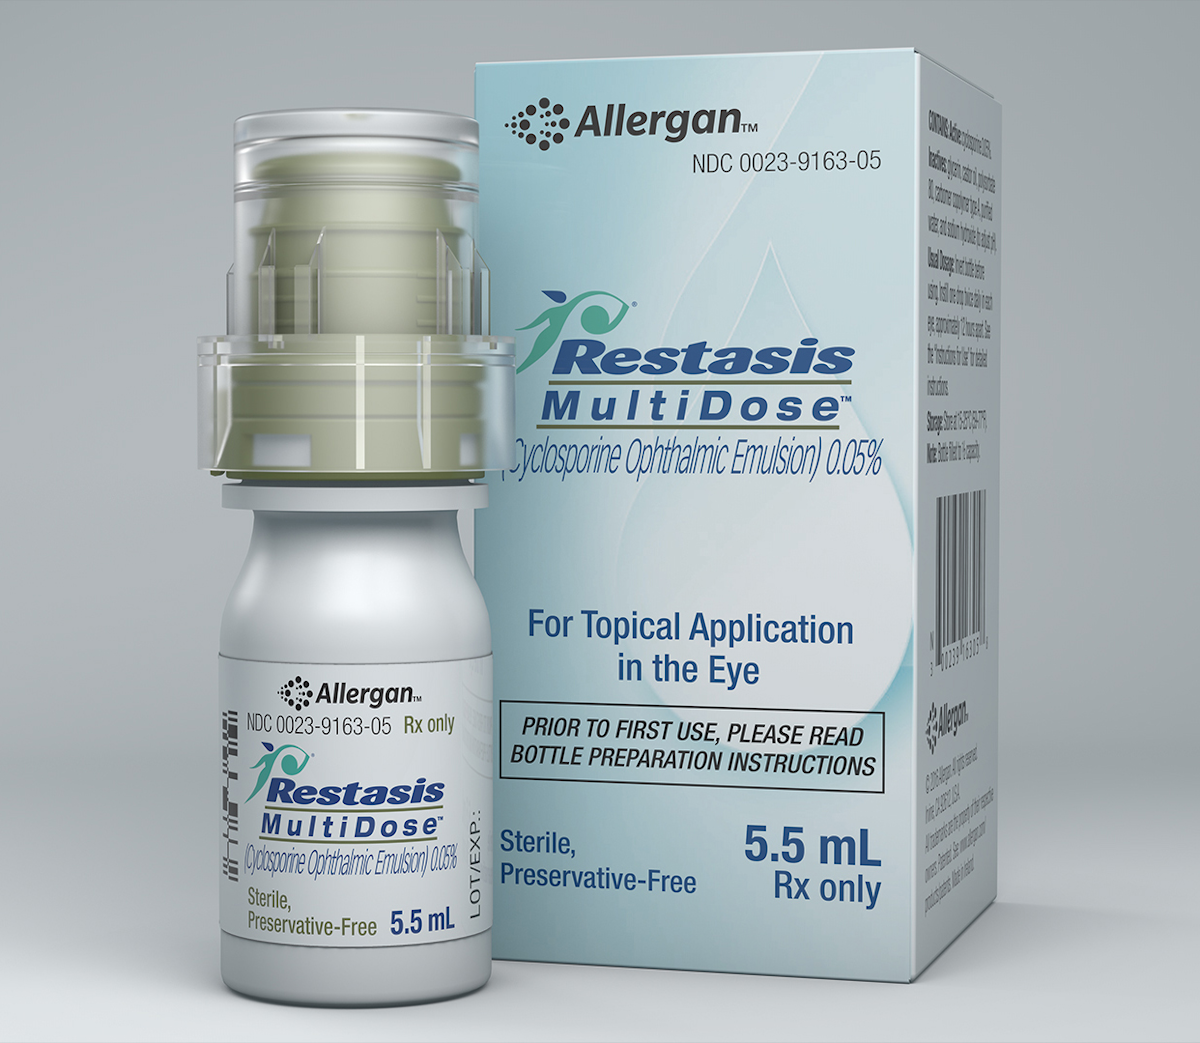 allergan-introduces-restasis-in-a-multidose-bottle-healthcare-packaging